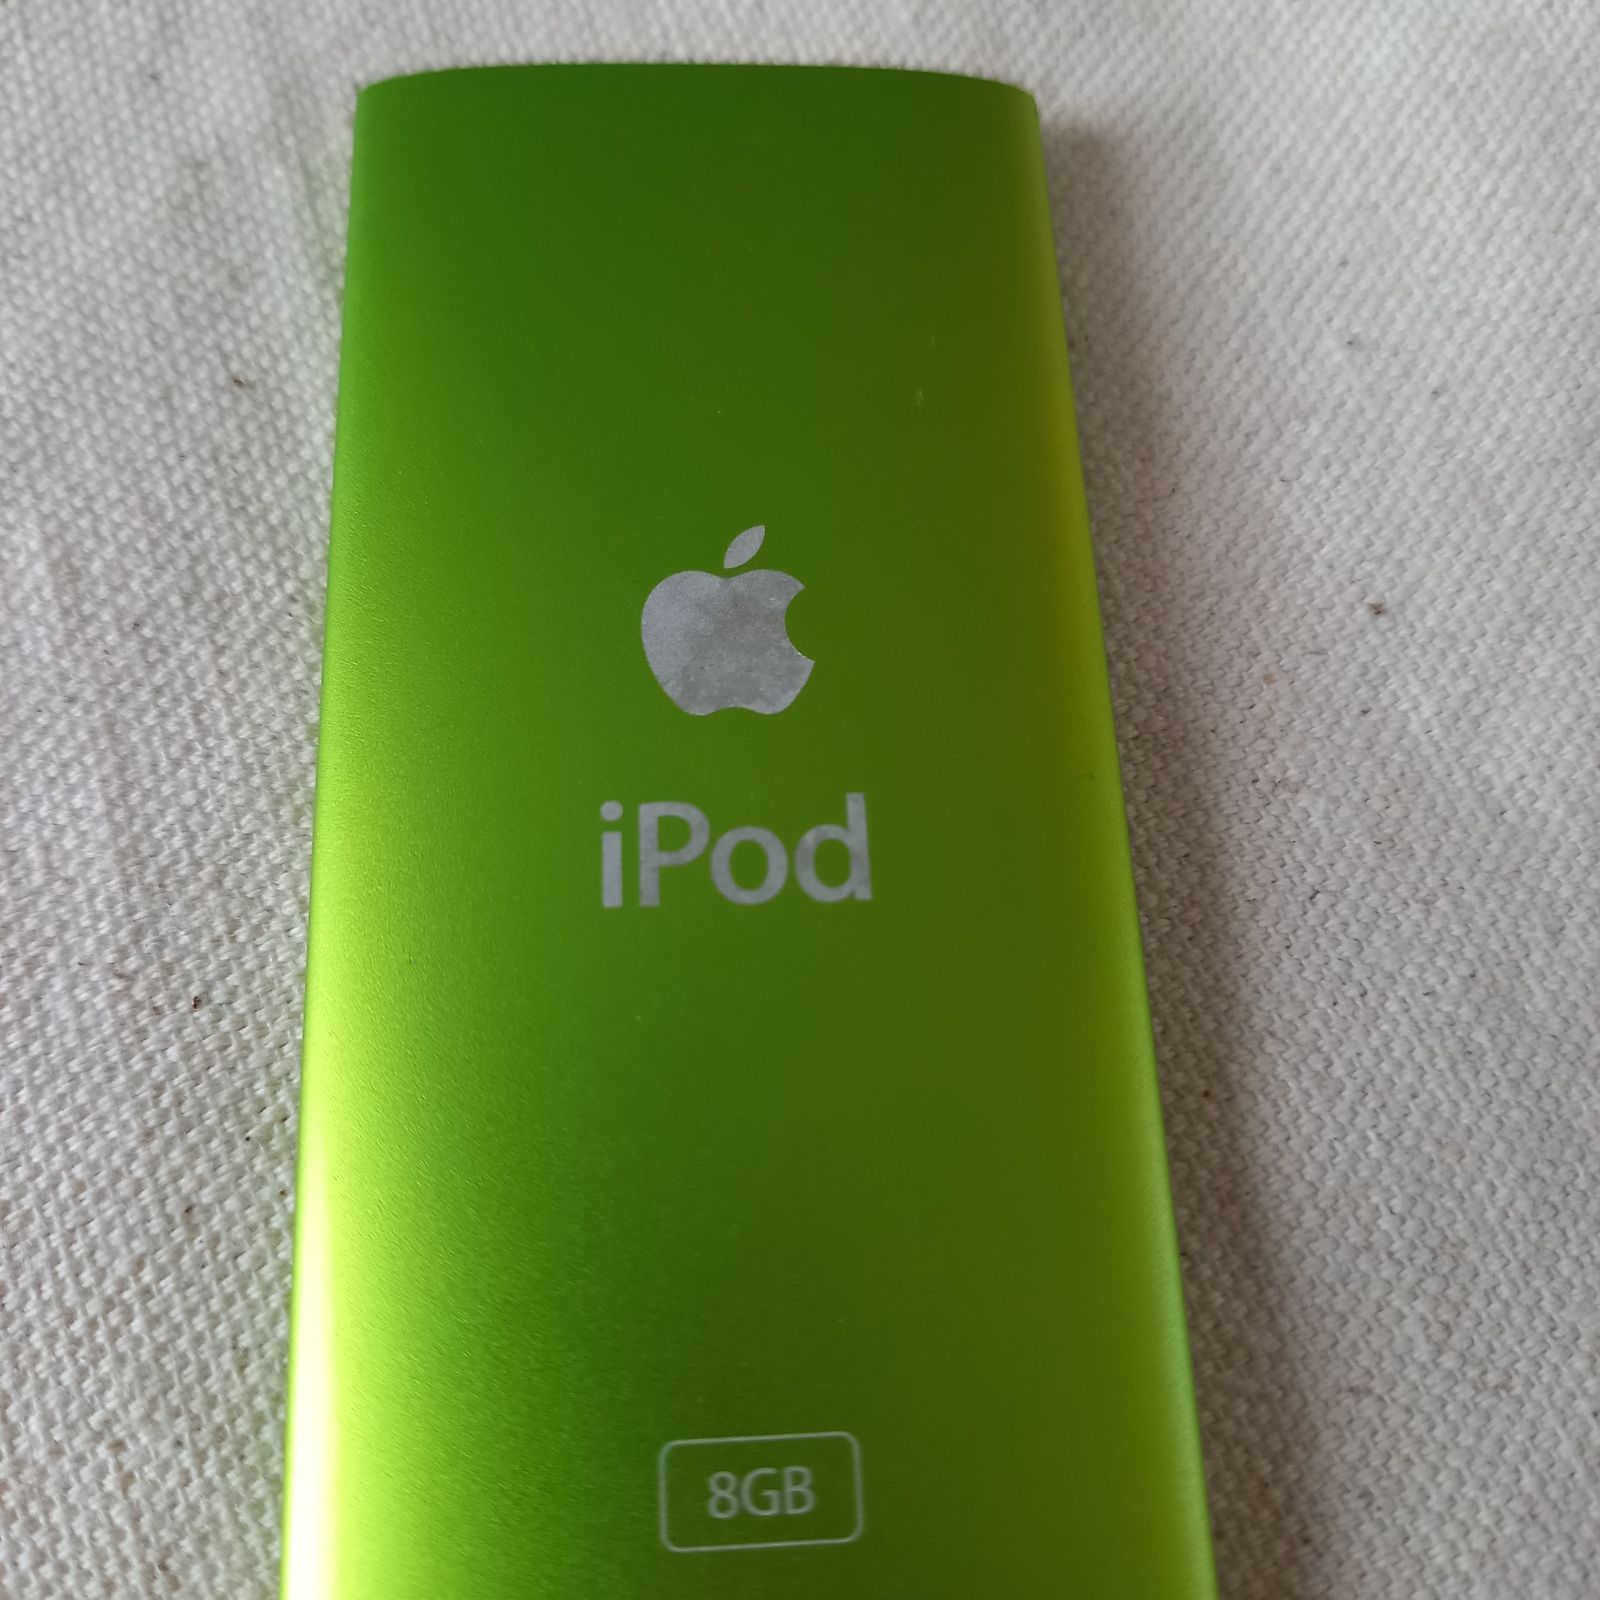 Apple】iPod nano 8GB 第5世代 第4世代 グリーン オレンジ - メルカリ